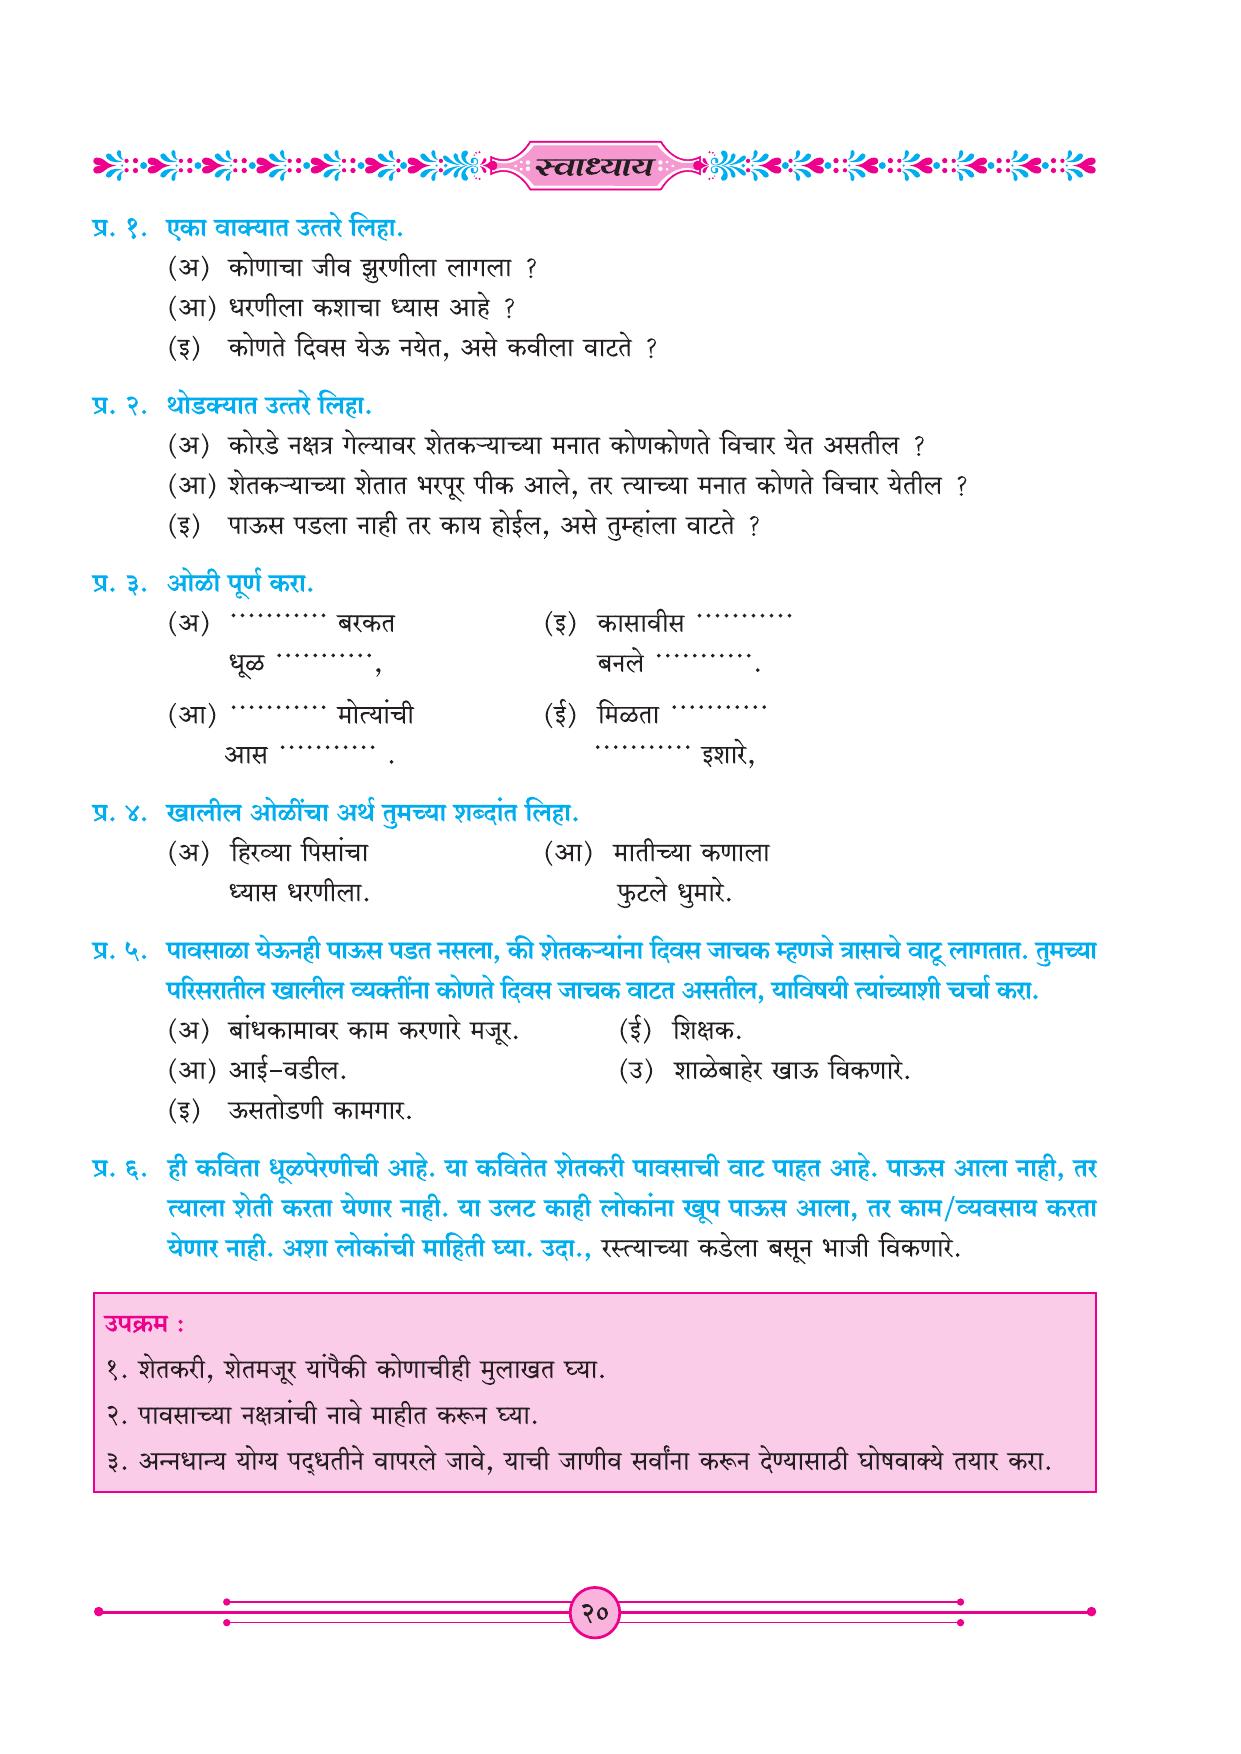 Maharashtra Board Class 4 Marathi Balbharati (Marathi Medium) Textbook - Page 30